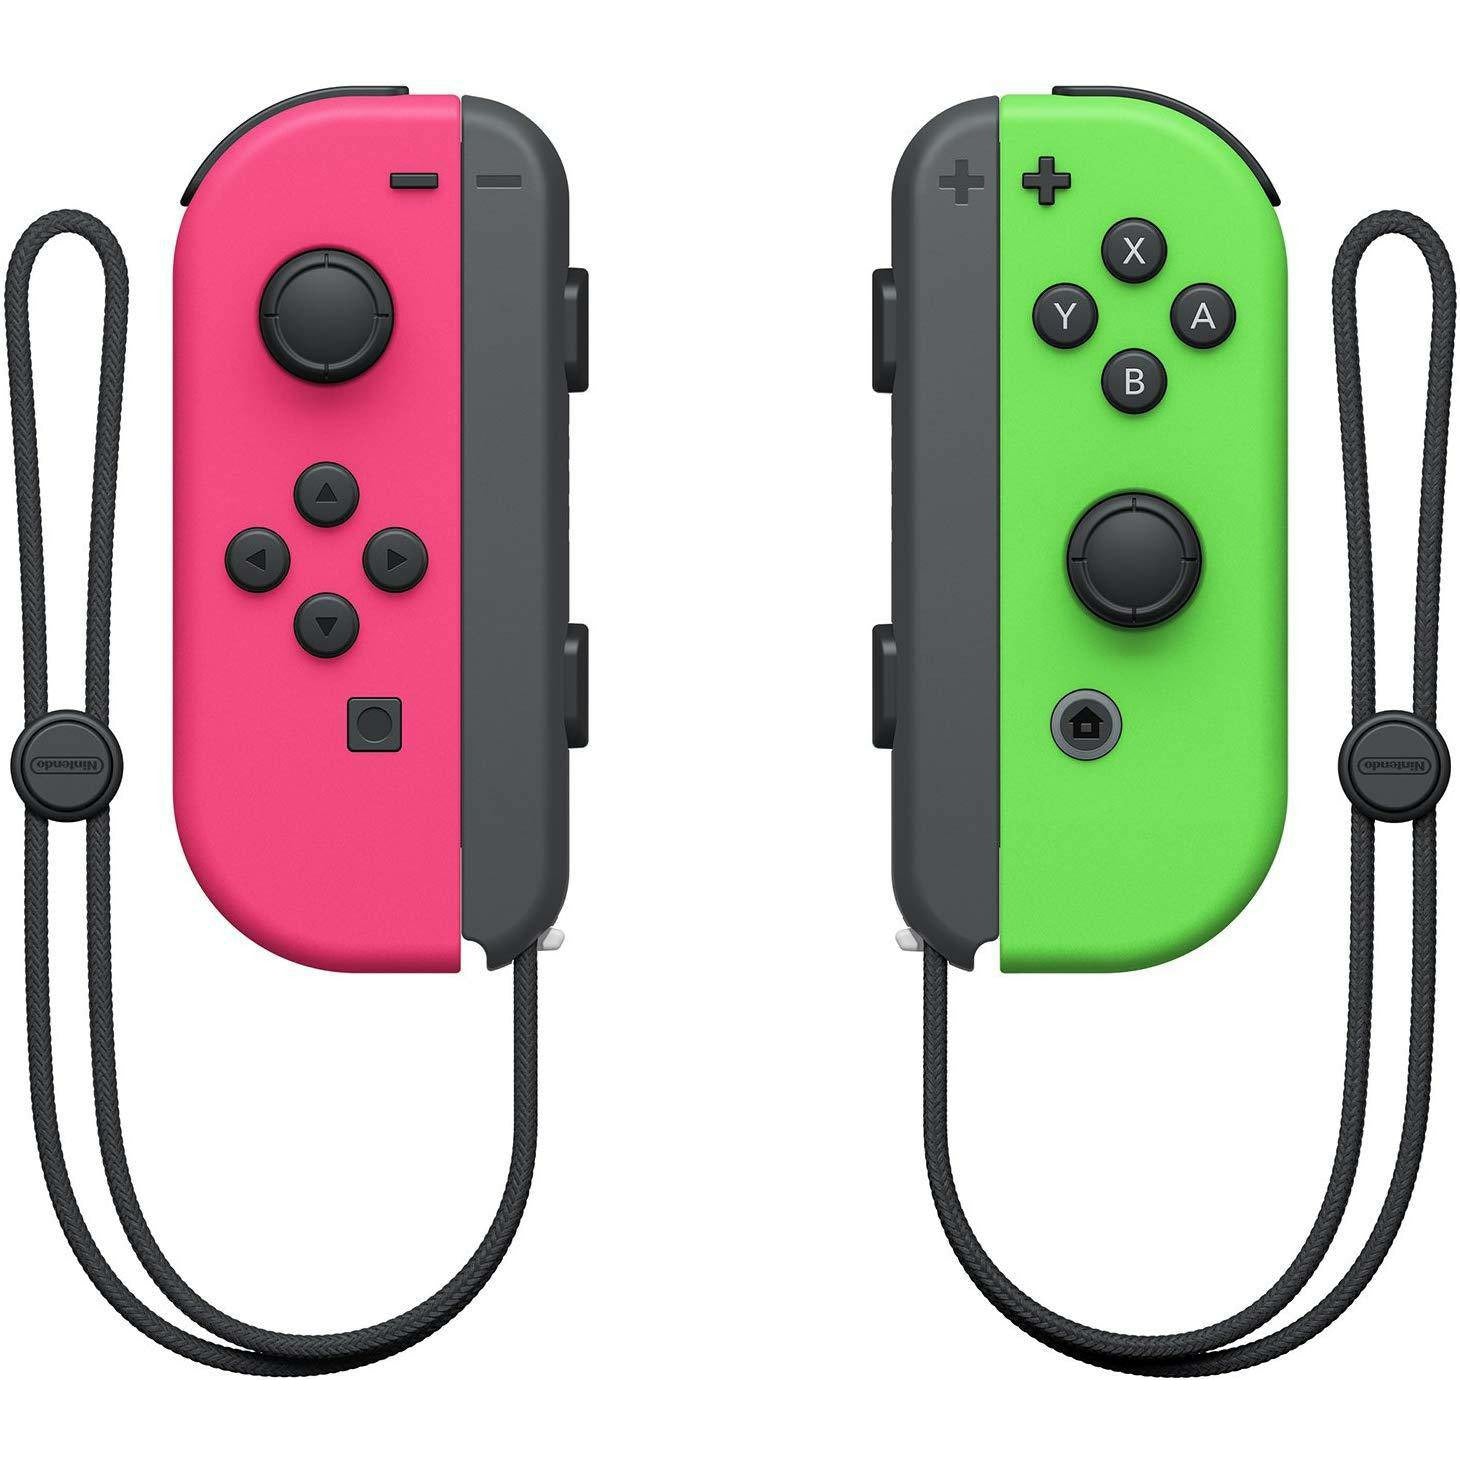 Controles para Nintendo Switch Joy-Con (L/R) - Gshop Pty